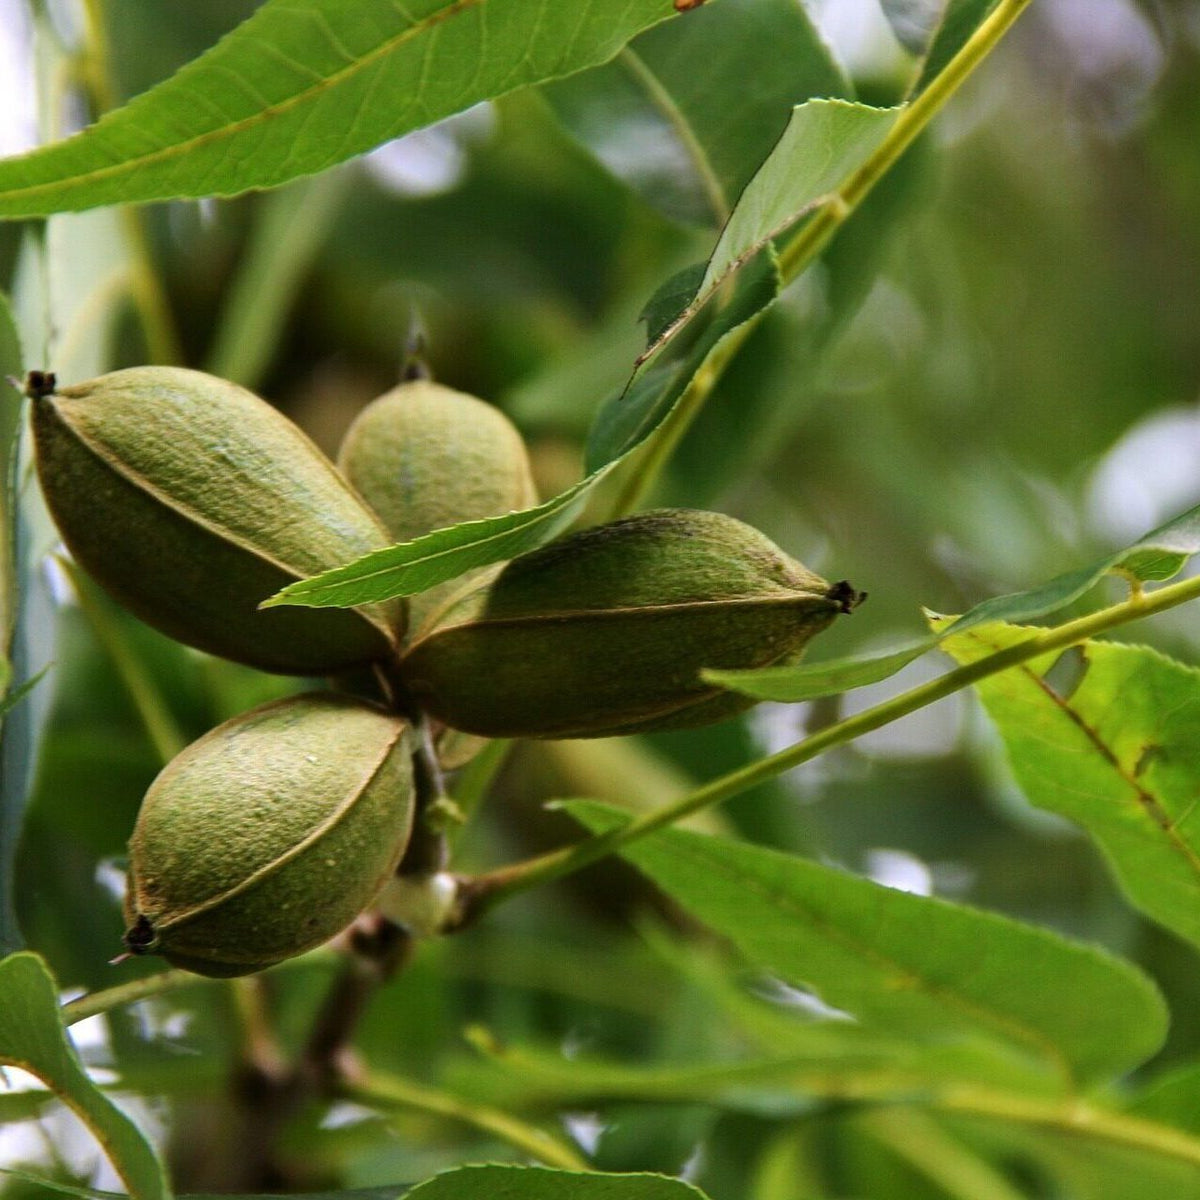 Pecan nut tree